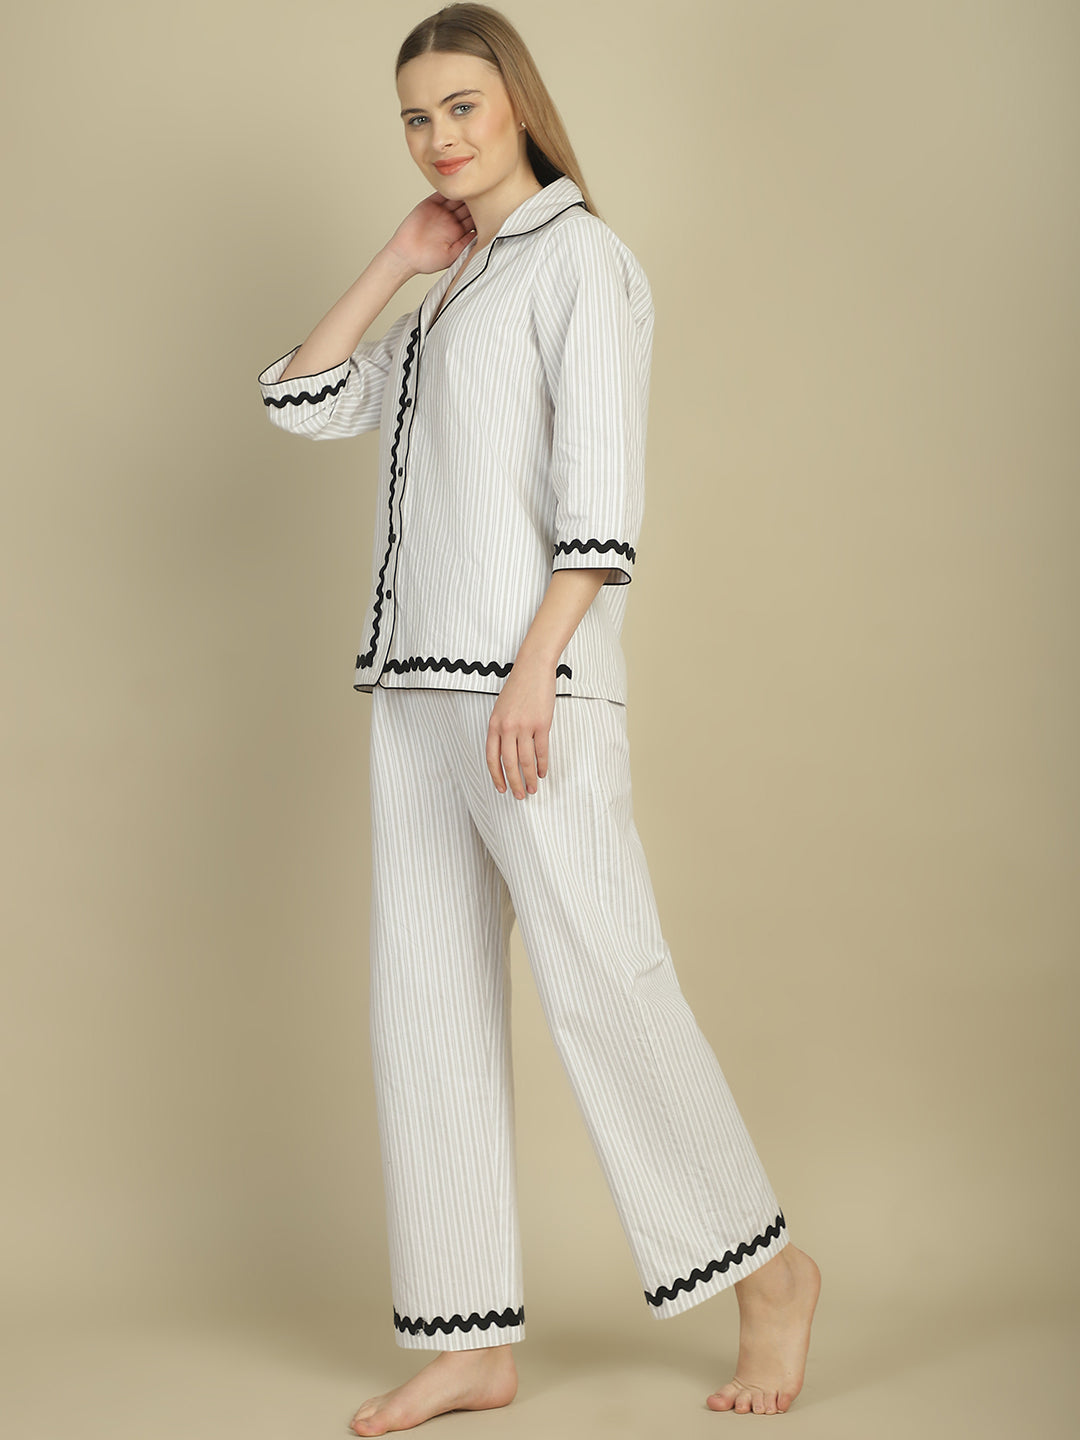 Blanc9 Contrast Black Lace Grey & White Stripes Nightwear